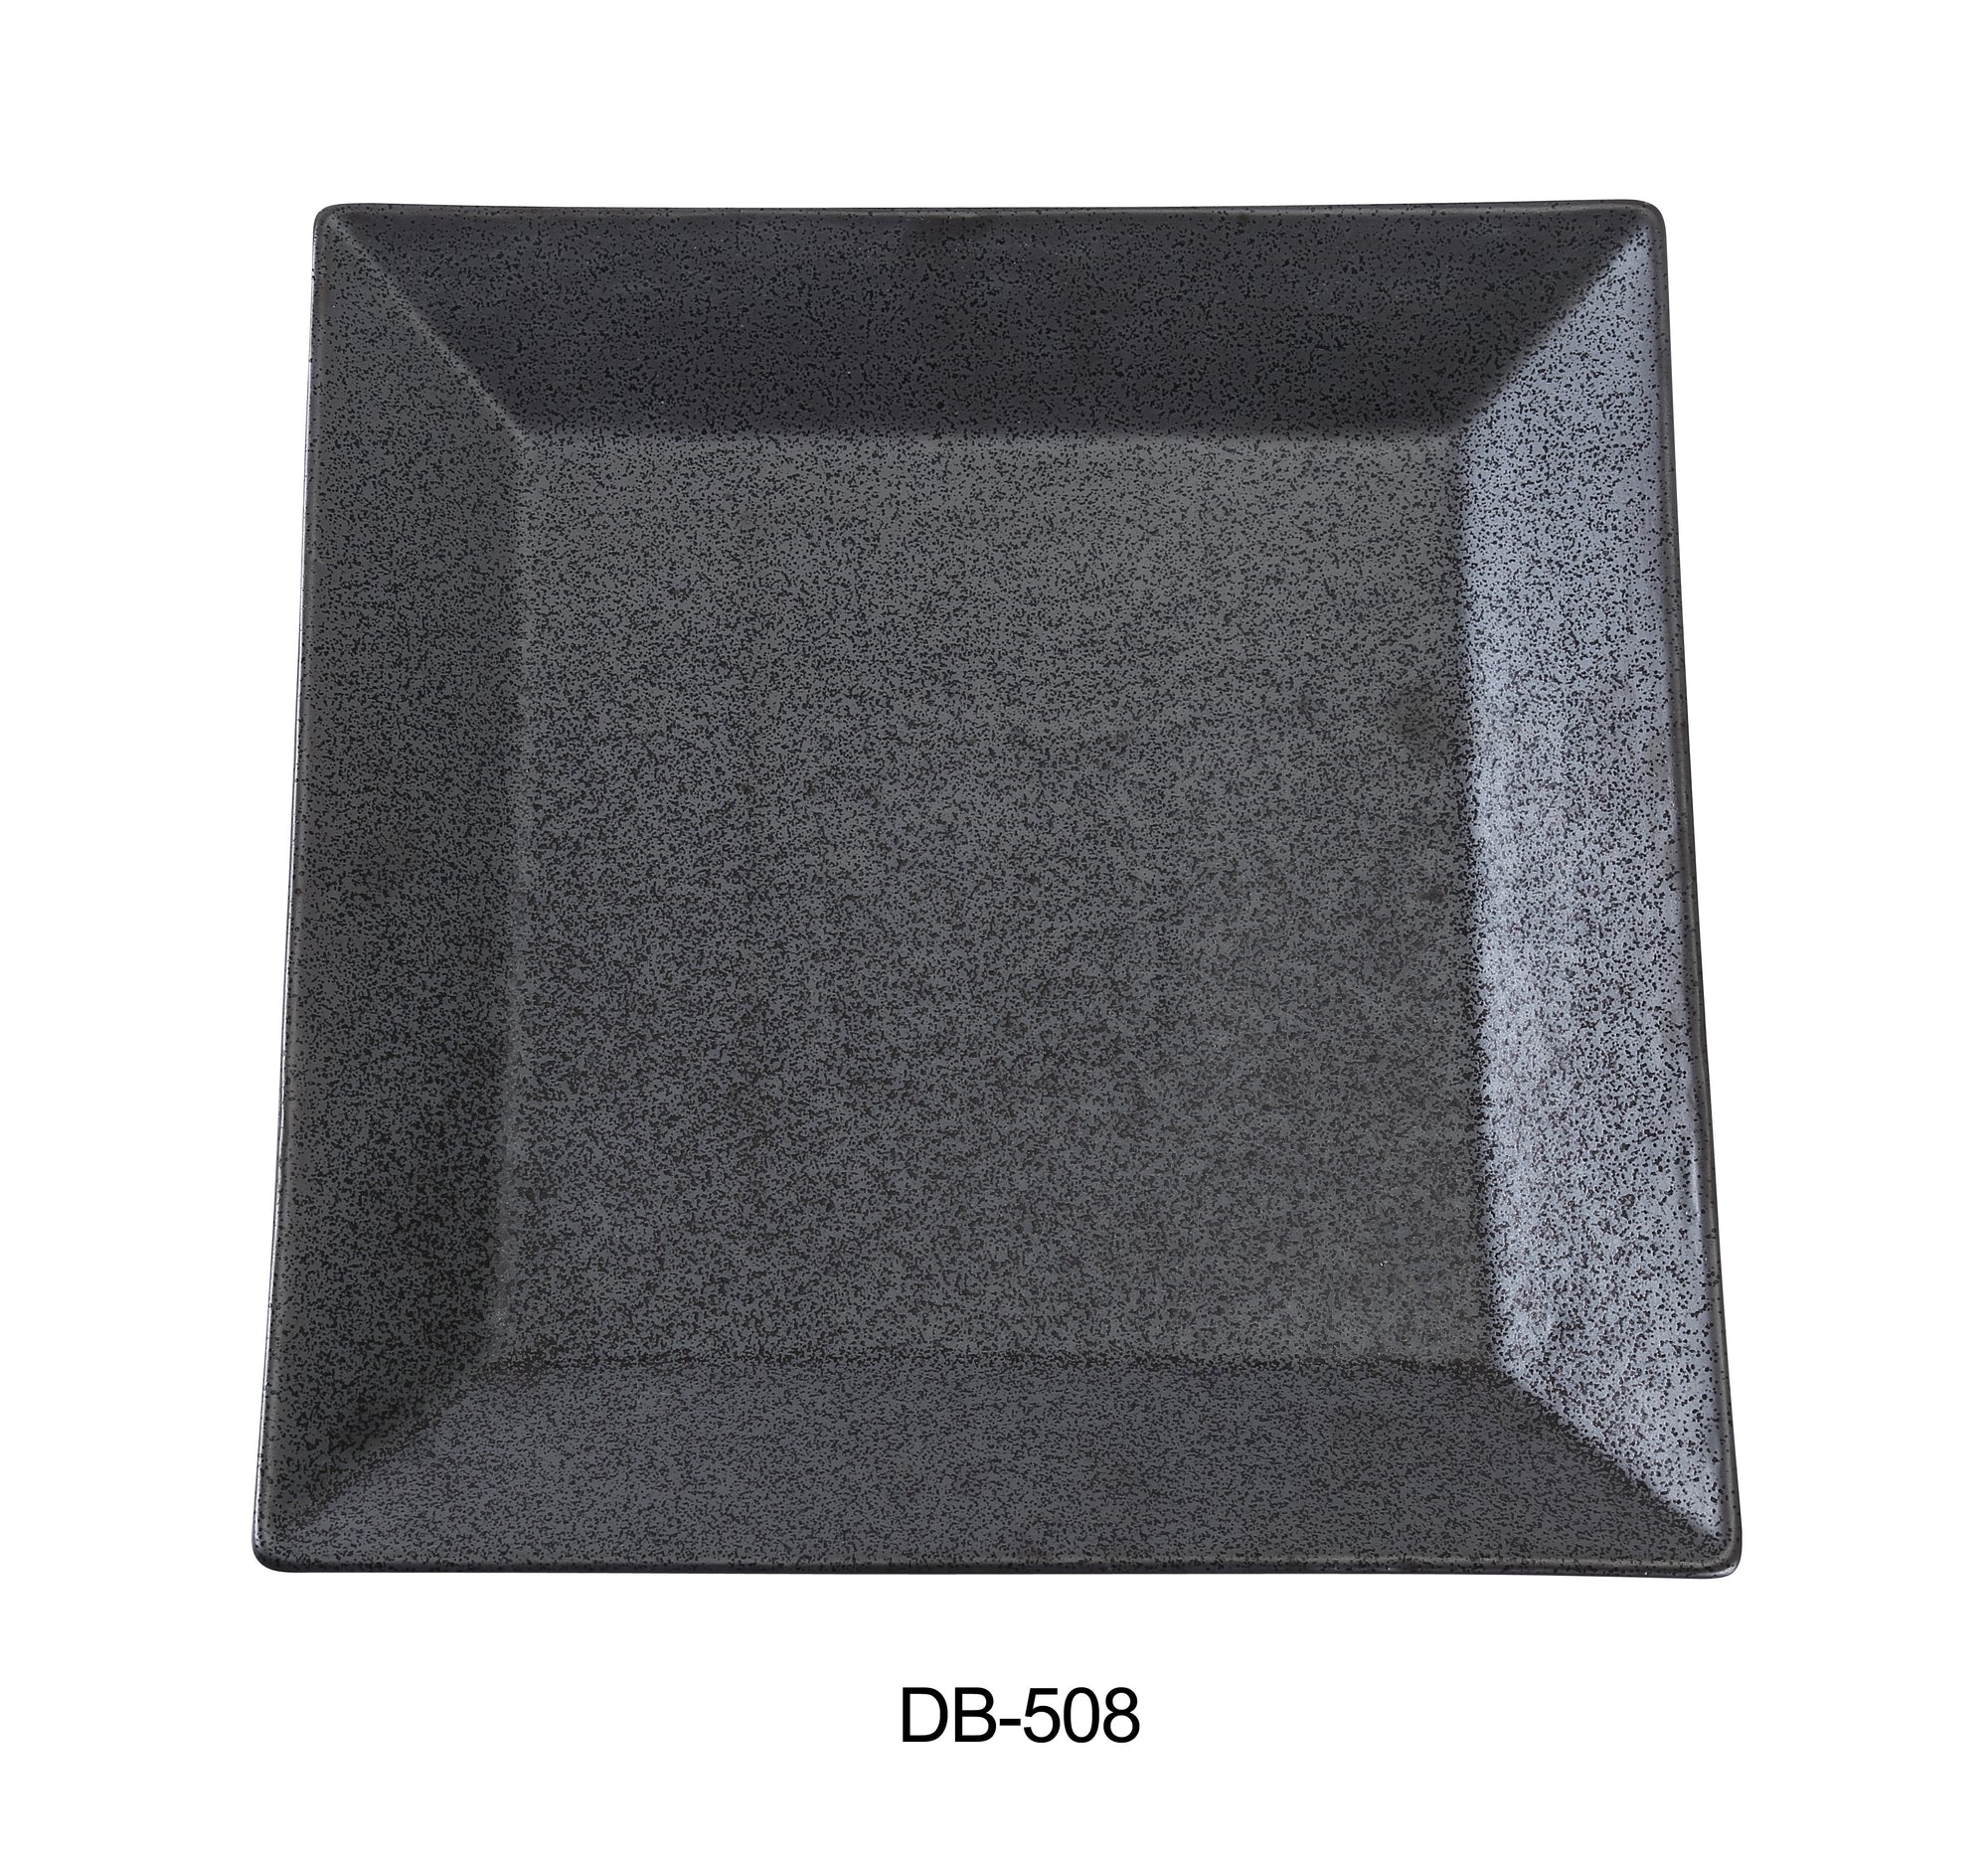 Yanco DB-508 Diamond Black Collection 8" Square Plate